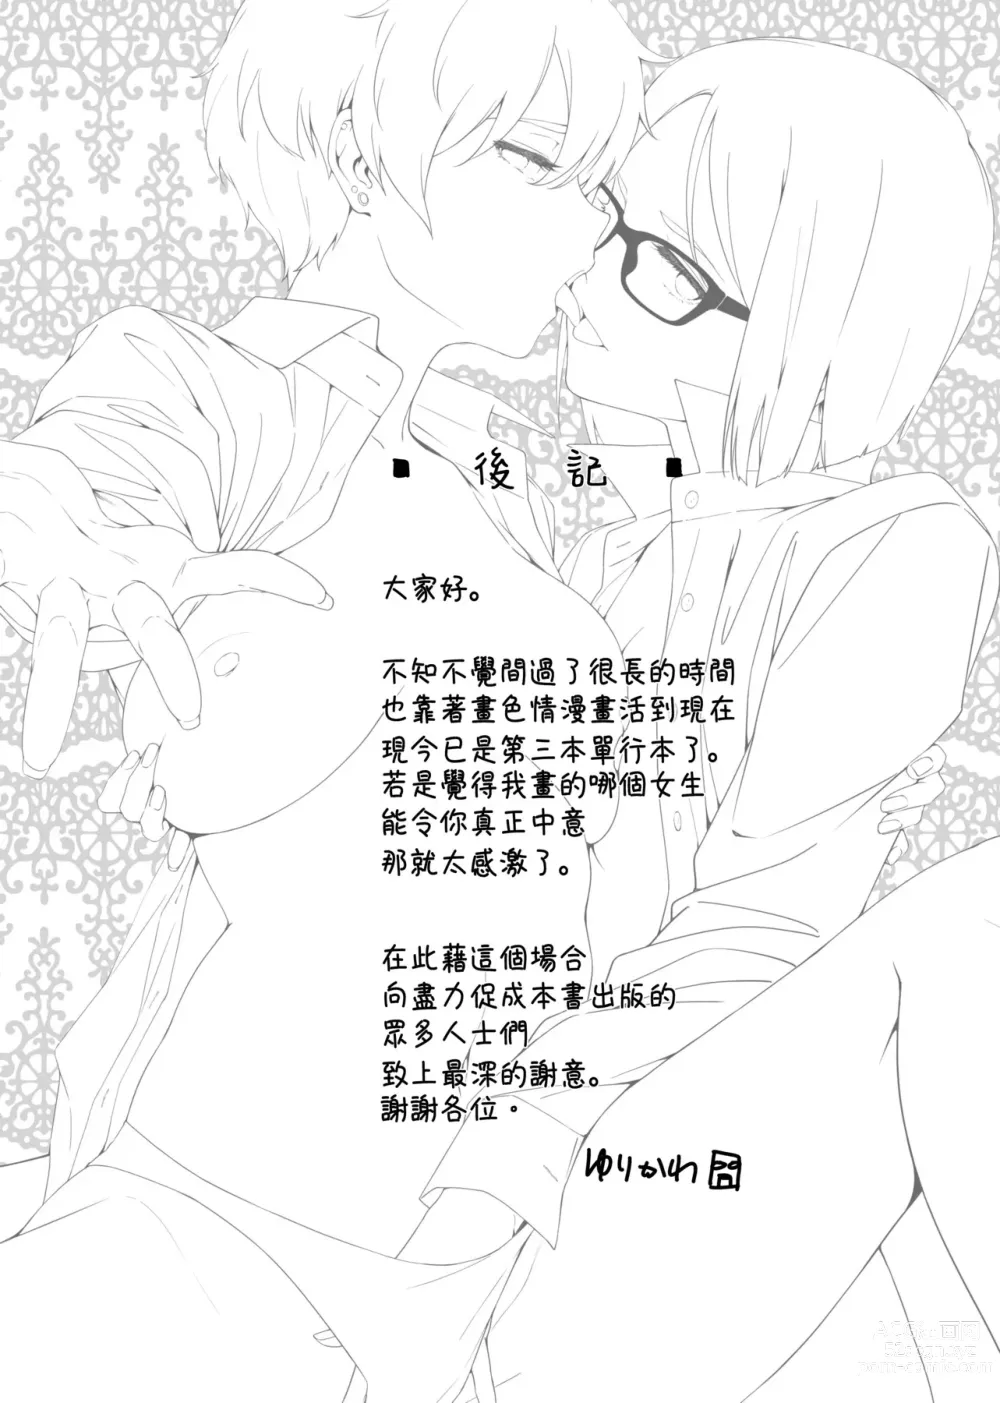 Page 230 of manga Natsu Koi Ota Girl - What Brings You to Japan?